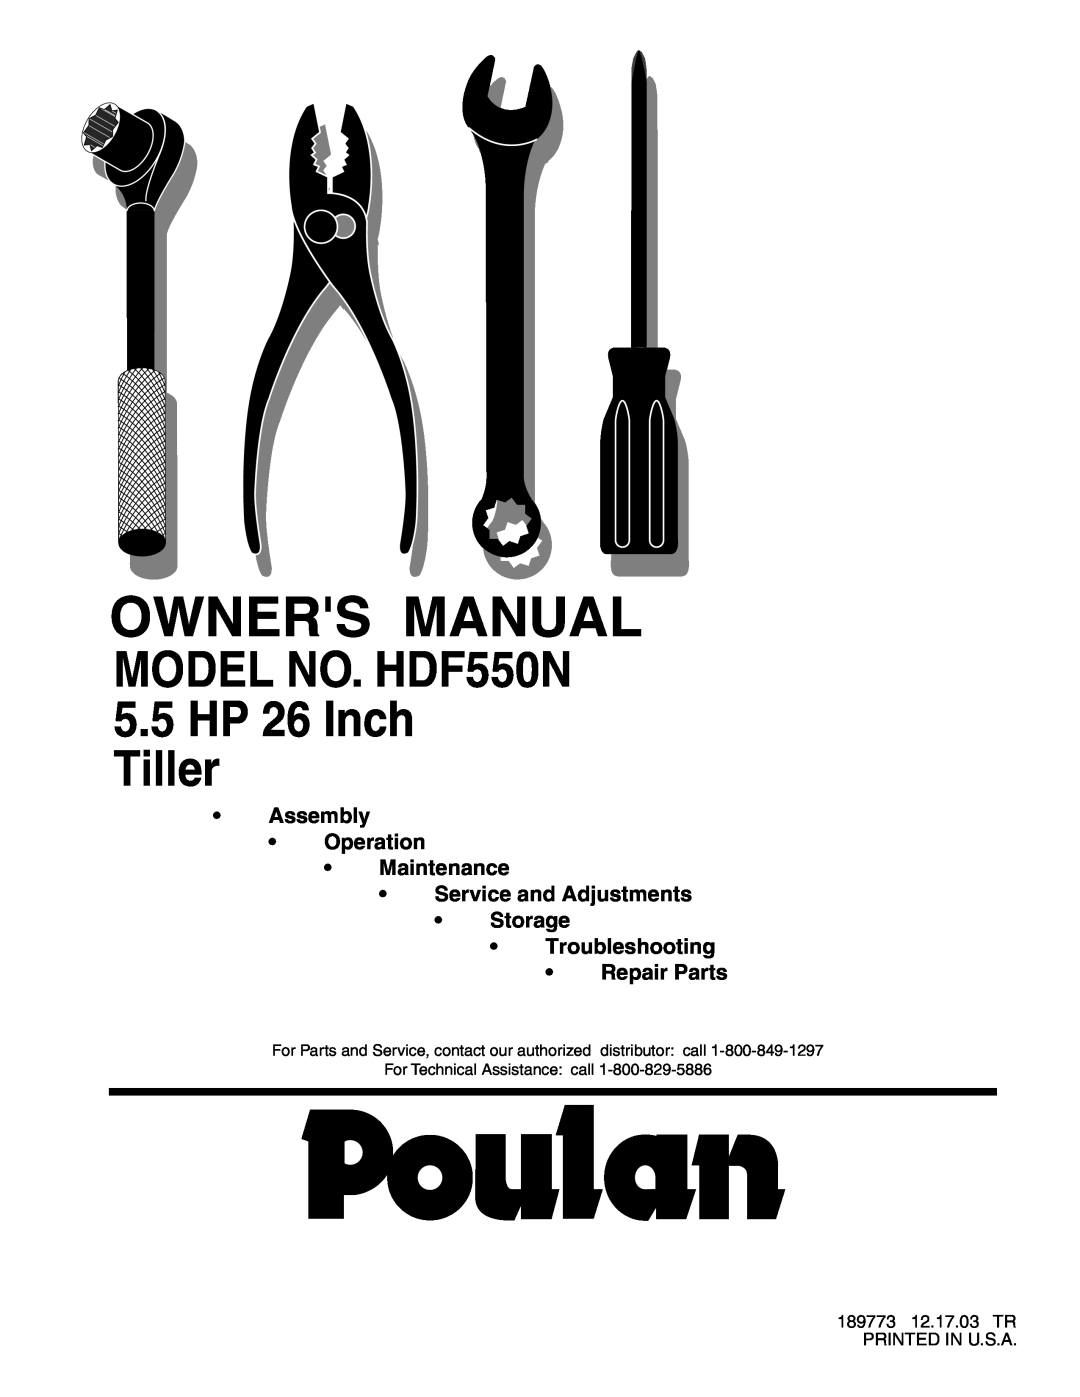 Poulan owner manual MODEL NO. HDF550N 5.5 HP 26 Inch Tiller, Troubleshooting Repair Parts 